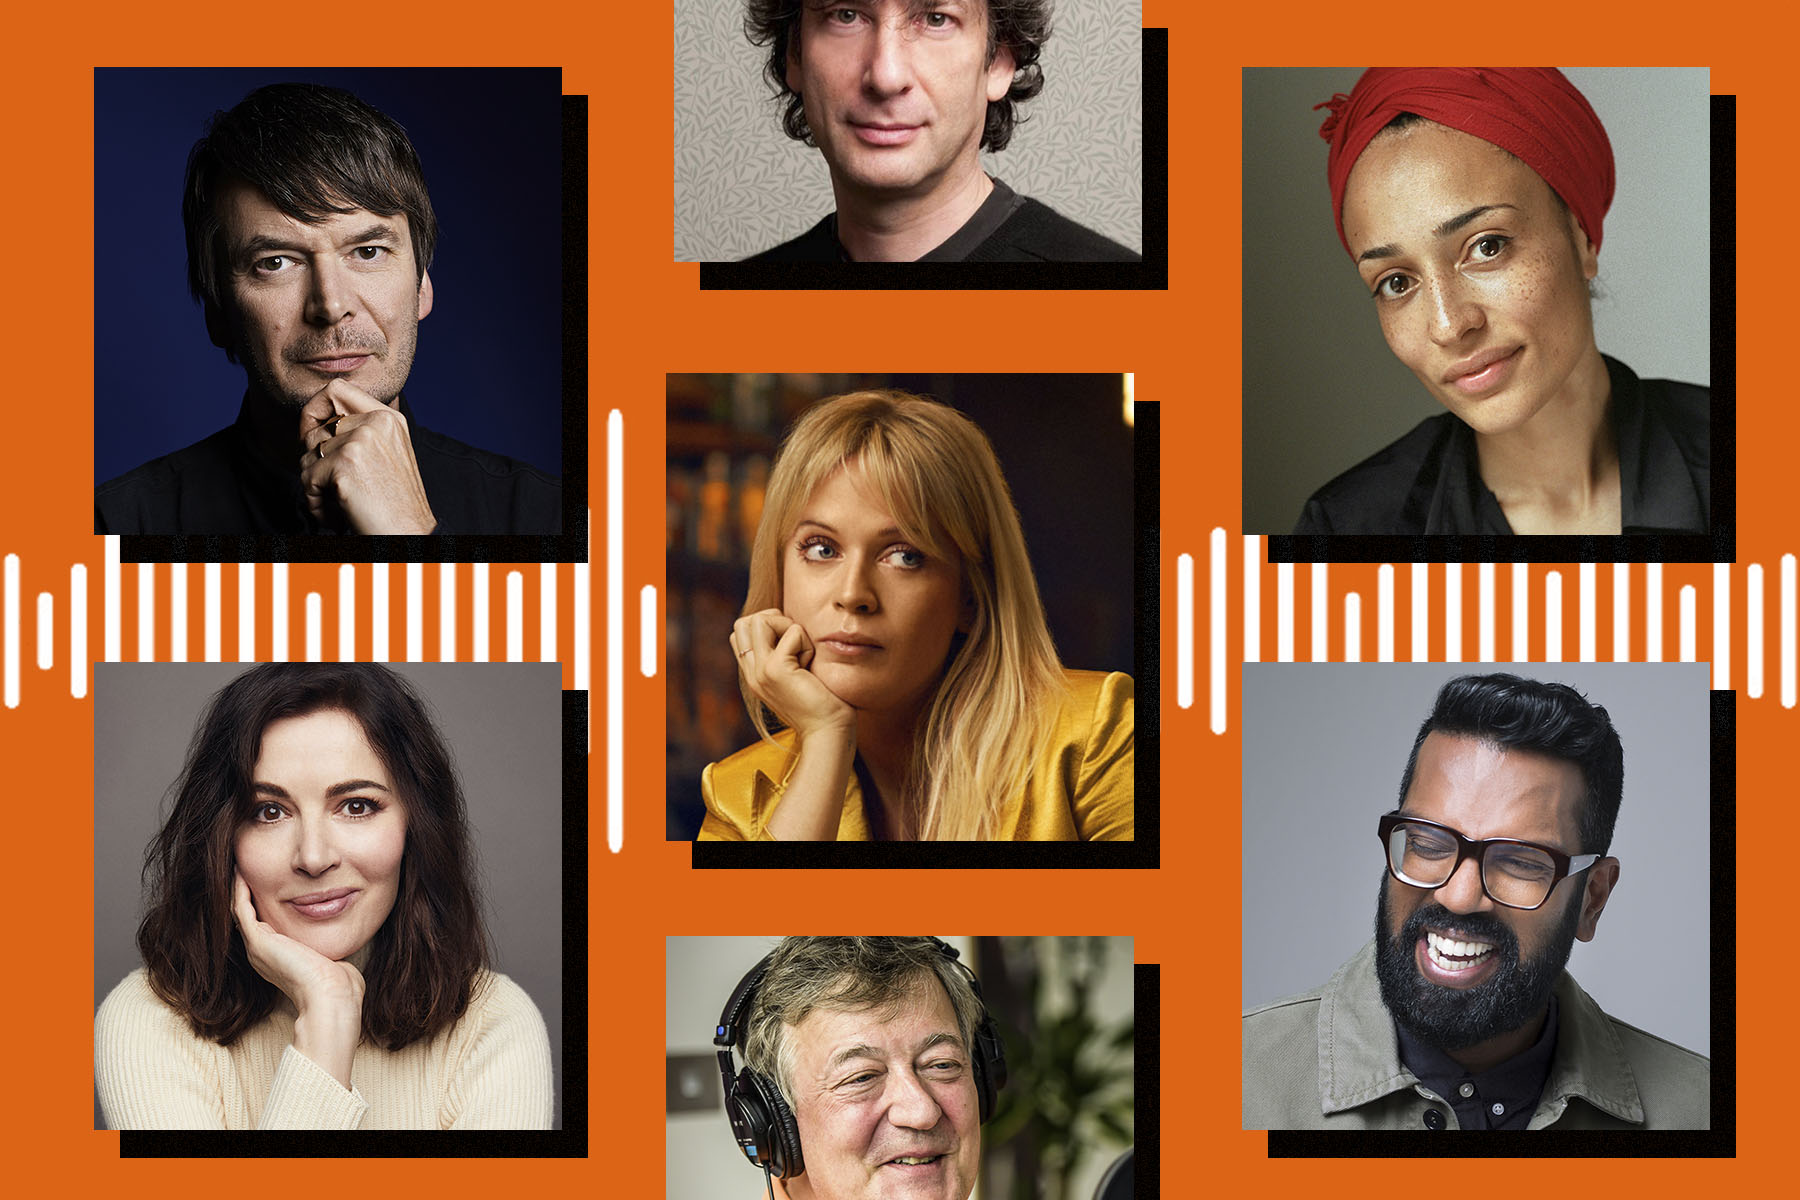 A collage of headshots of authors, including Ian Rankin, Nigella Lawson, Neil Gaiman, Dolly Alderton, Stephen Fry, Zadie Smith and Romesh Ranganathan, seen against a bright orange background.